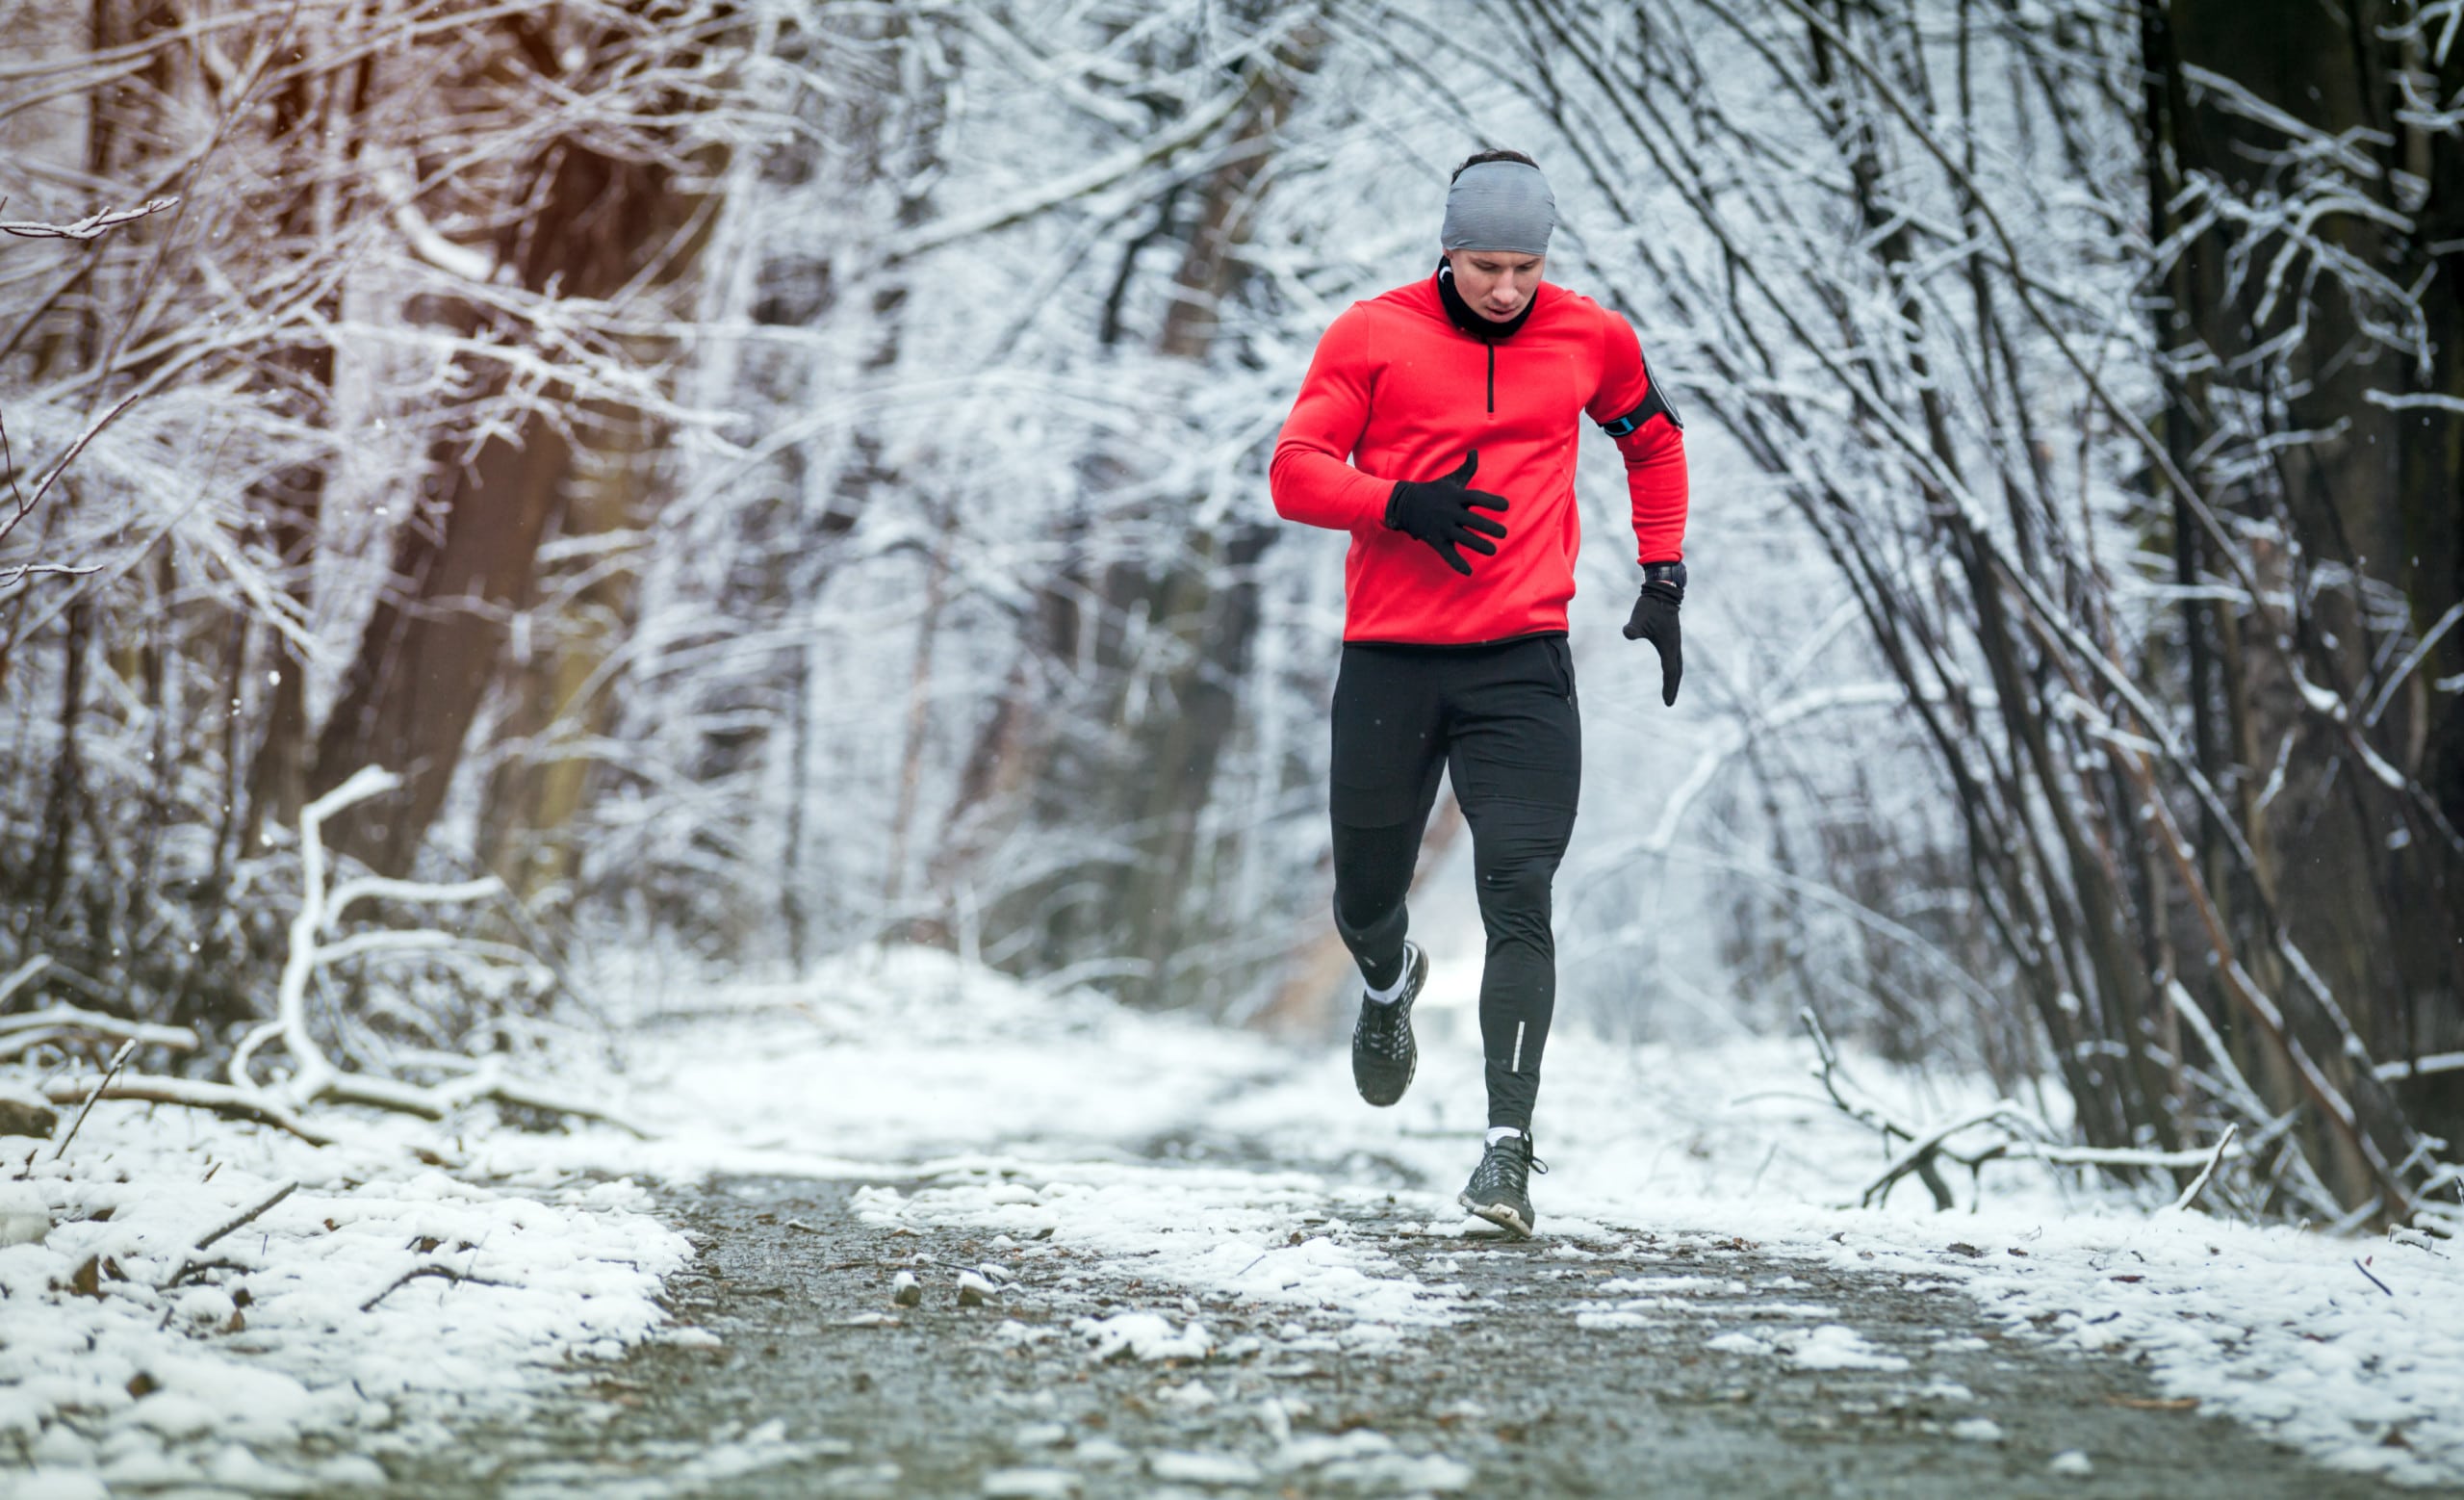 Best winter running gear to beat the cold - Running 101